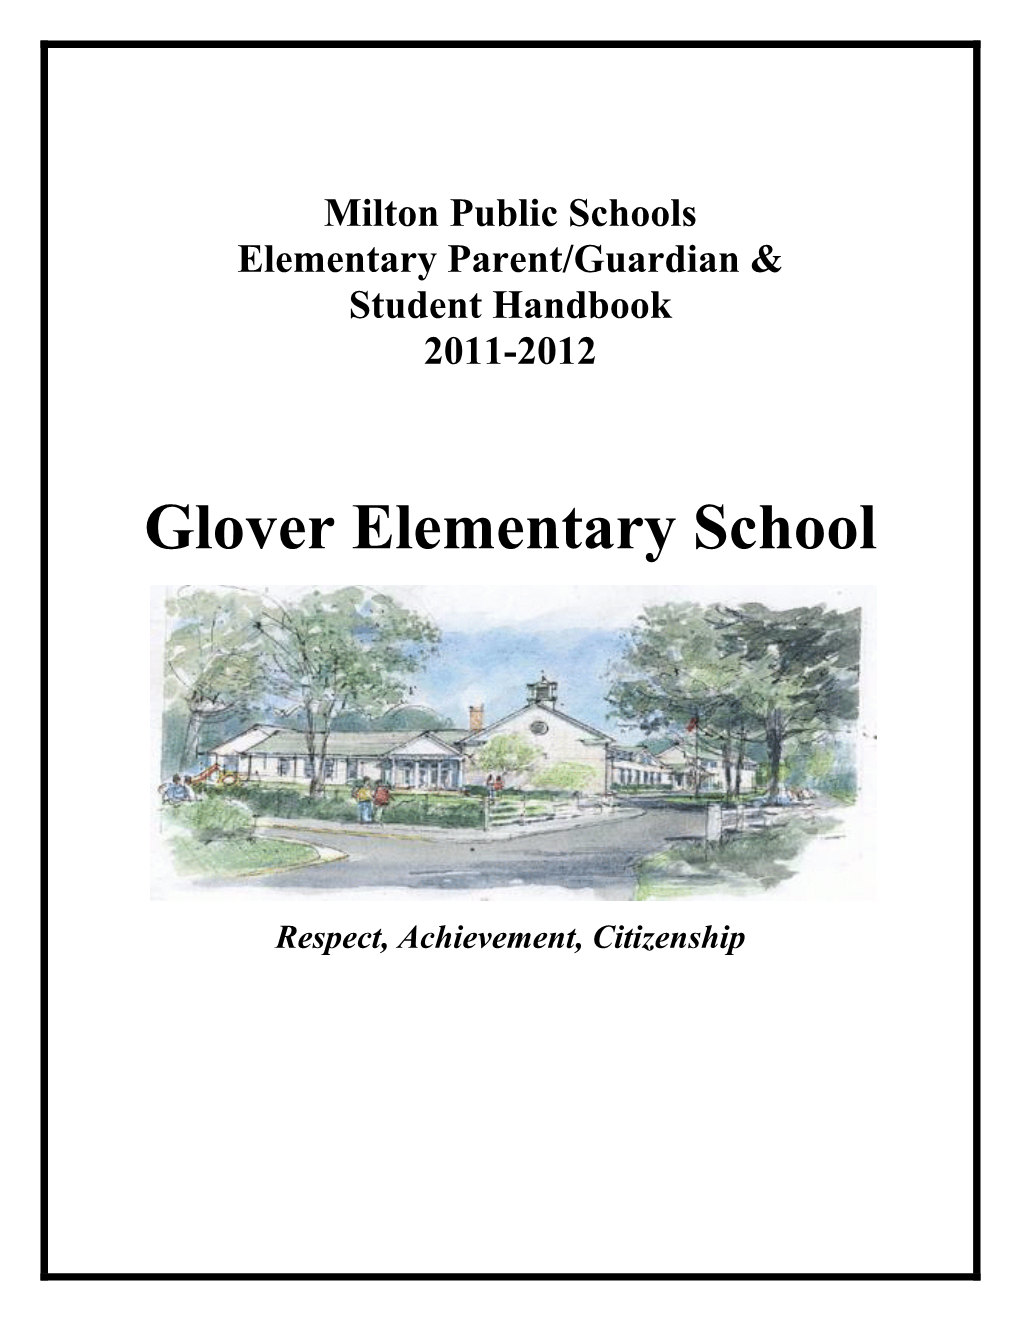 Glover Elementary School